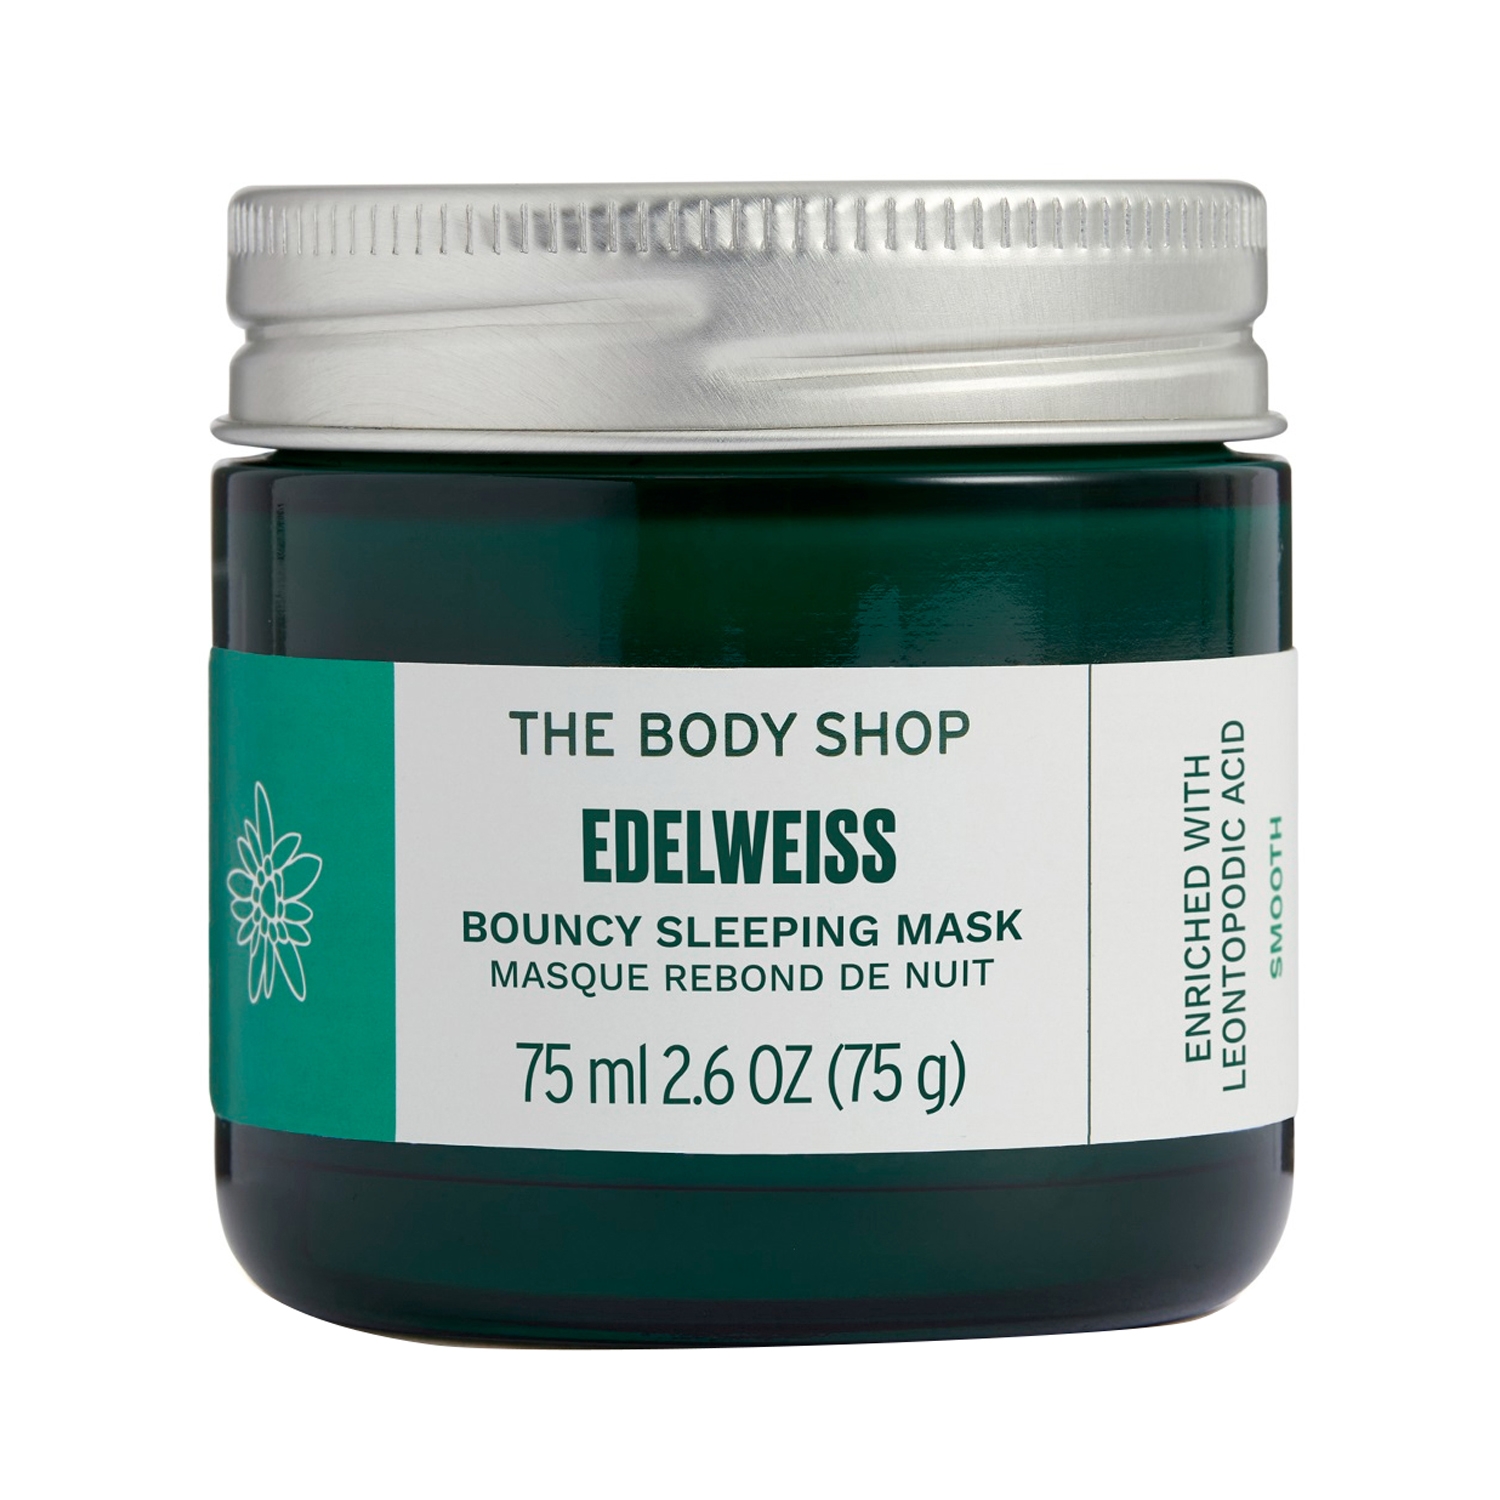 The Body Shop | The Body Shop Edelweiss Bouncy Sleeping Mask (75ml)